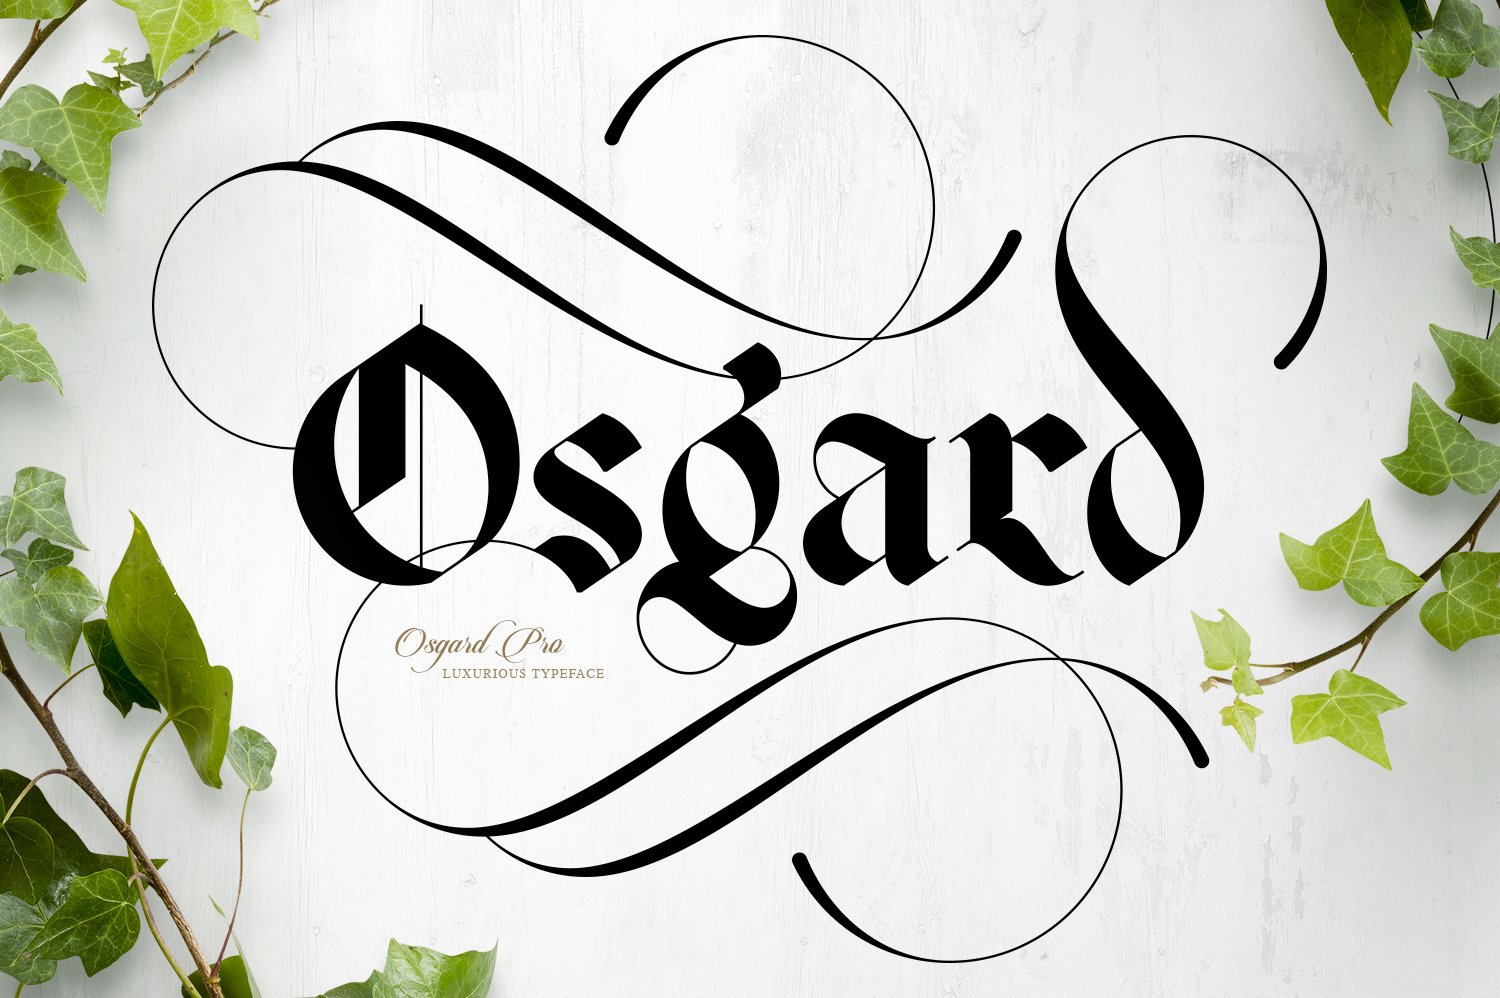 Osgard Pro | Font cover image.